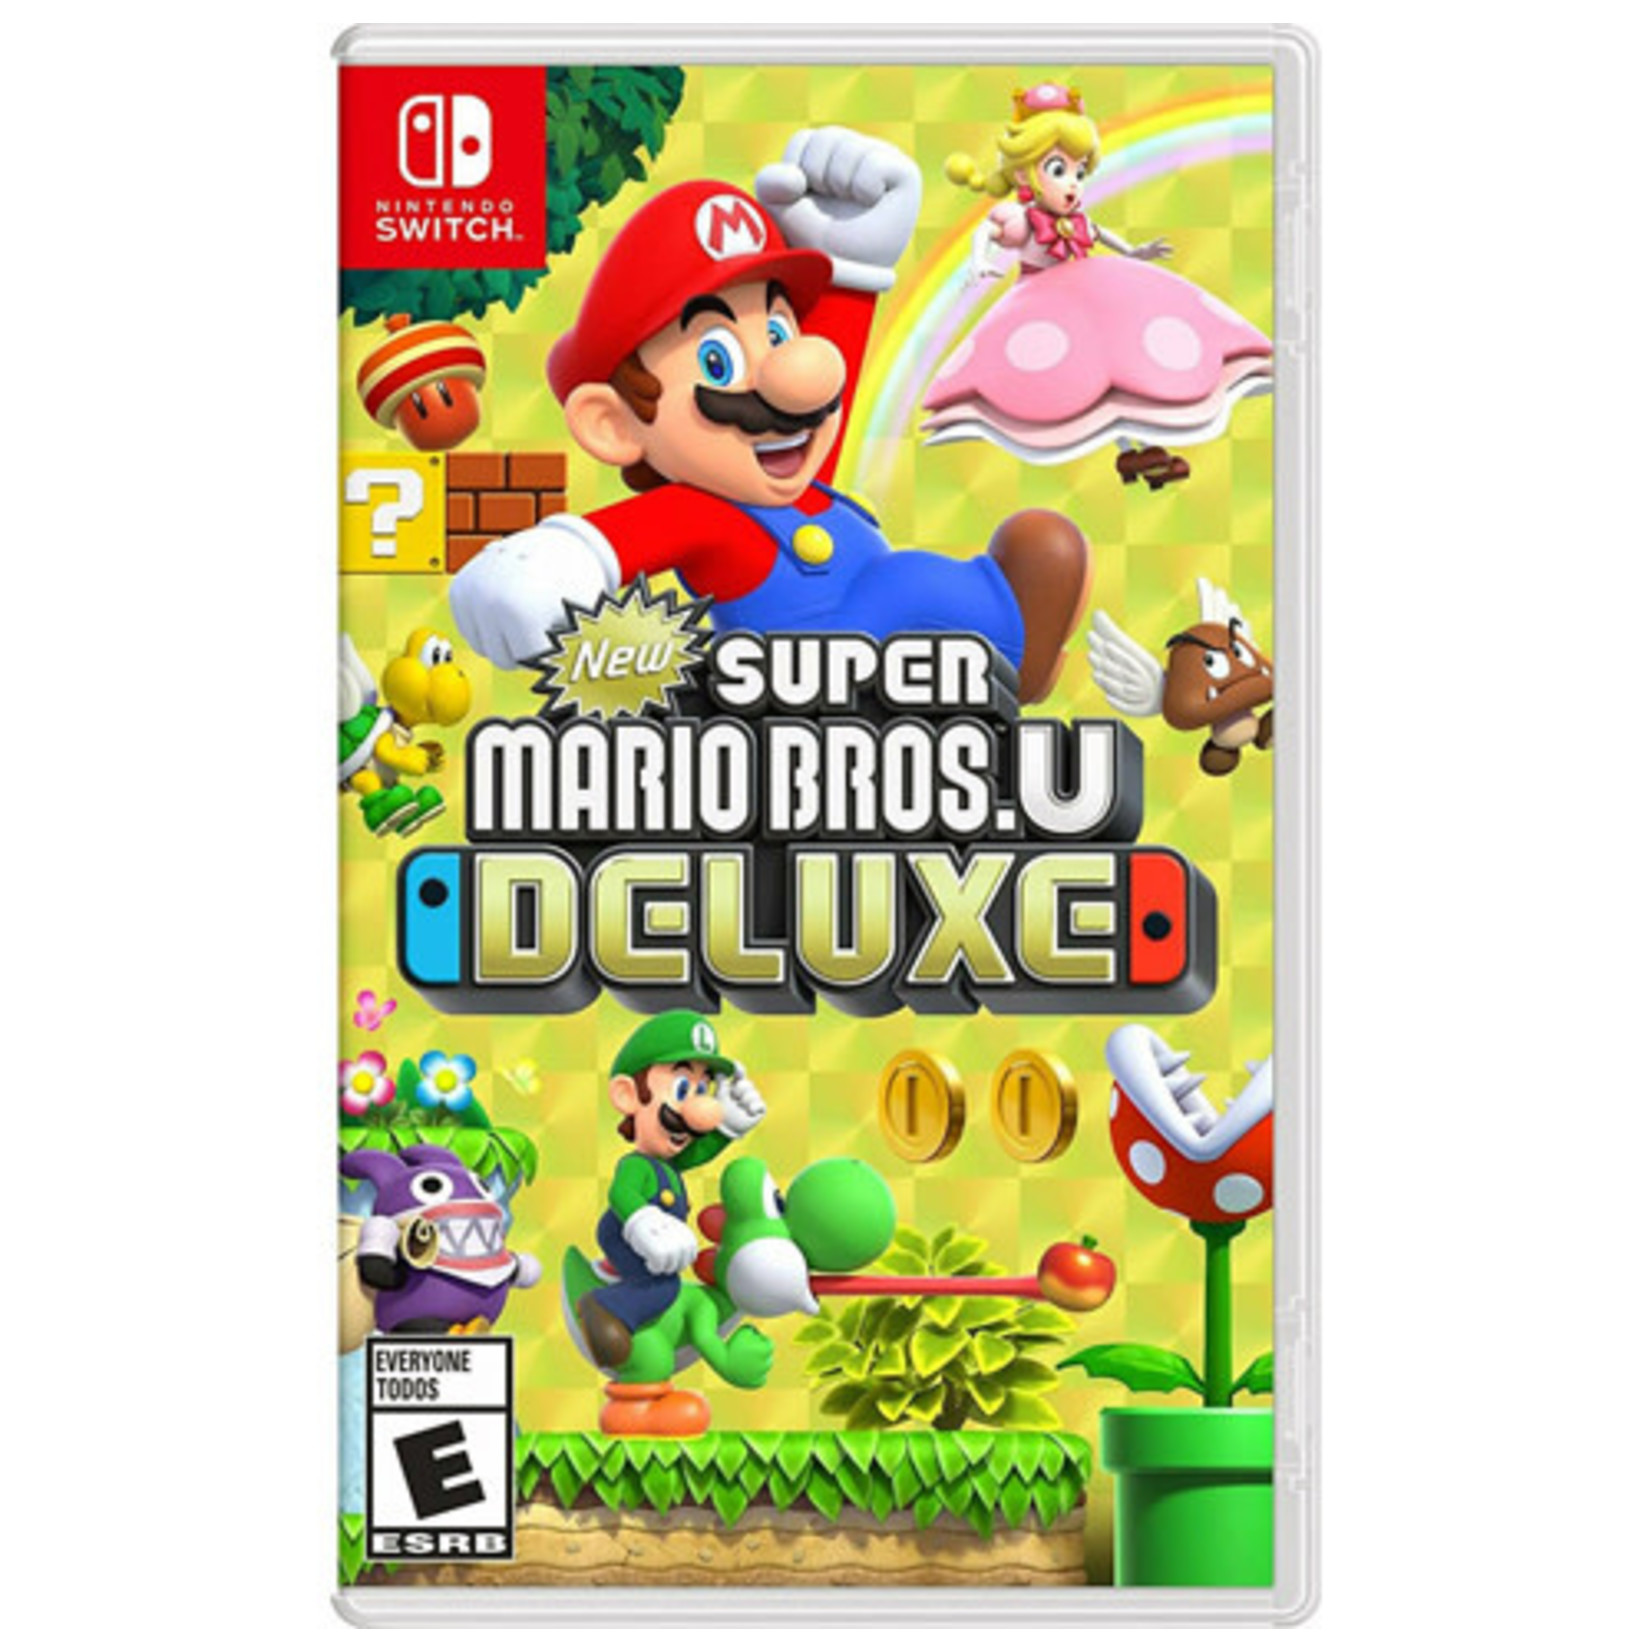 SWITCHU-New Super Mario Bros U Deluxe